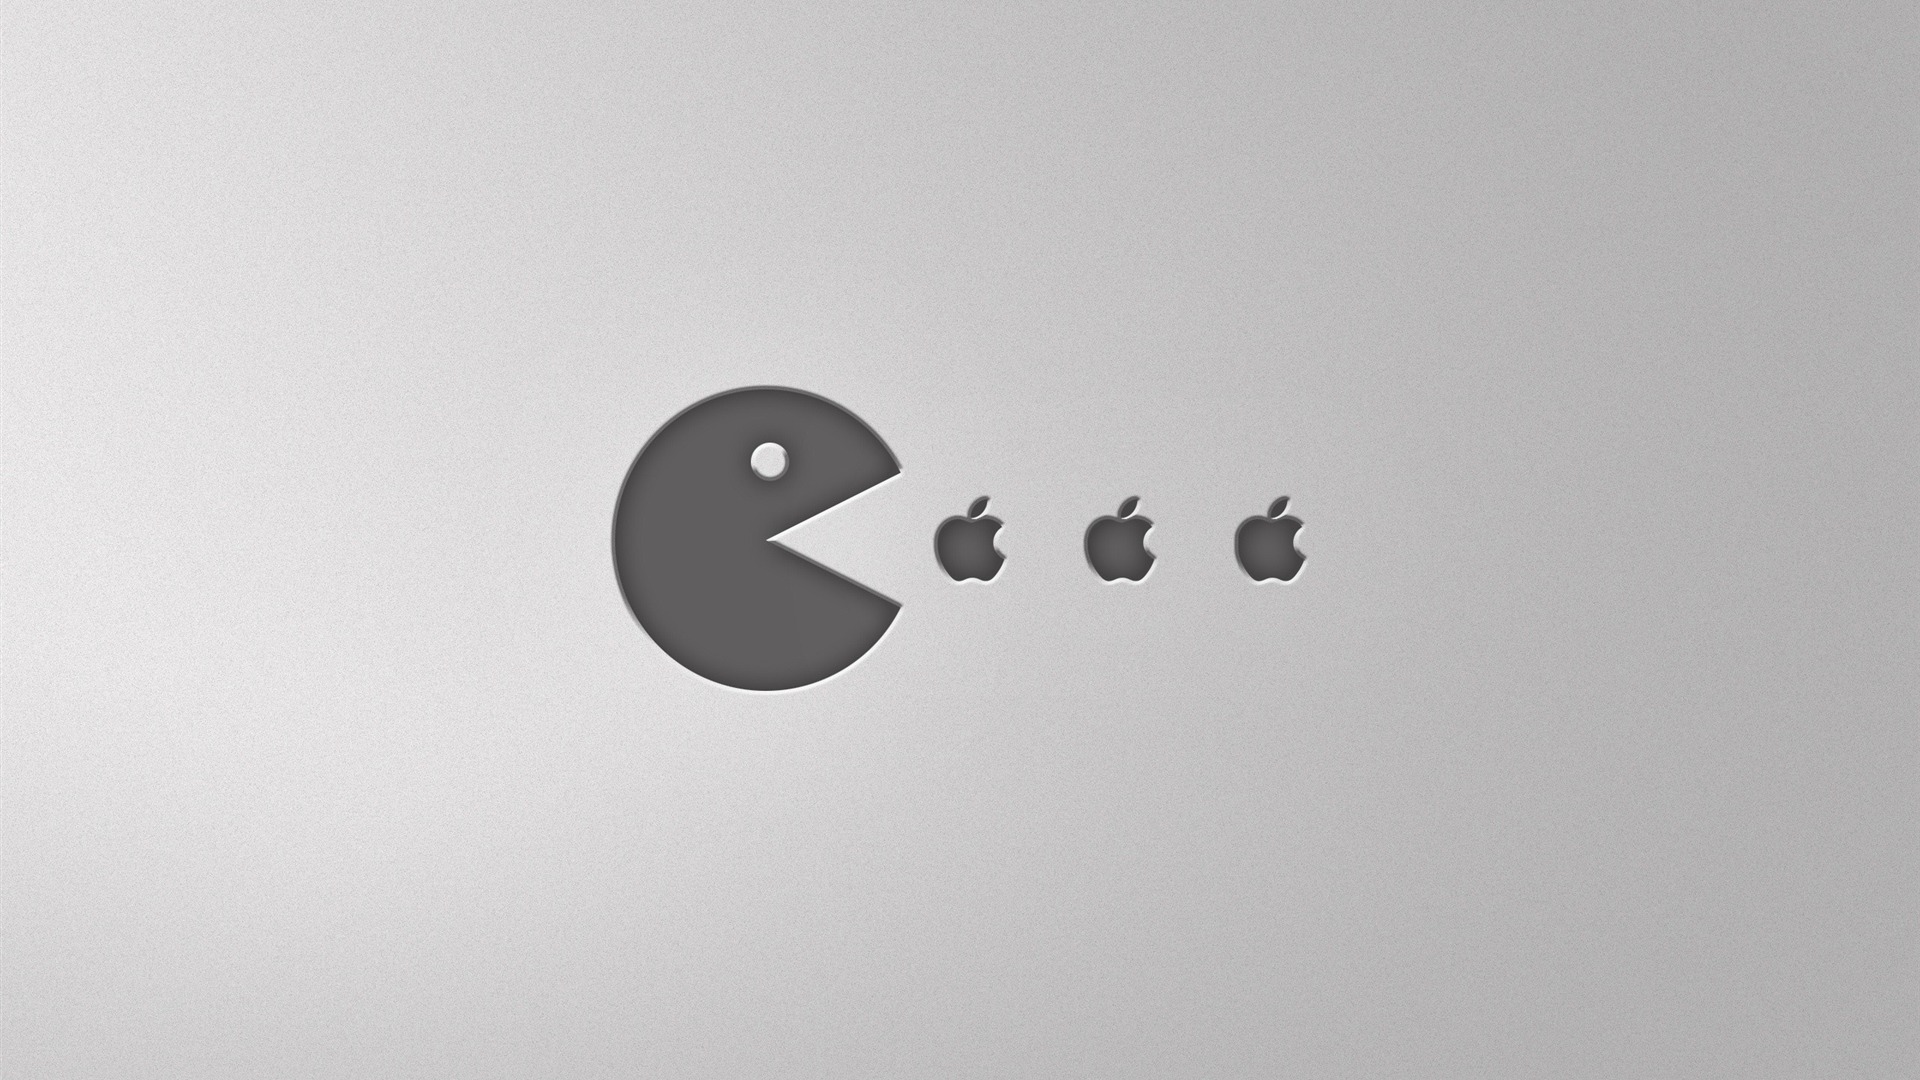 Advertising / Pacman Apple-think Different Apple Mac - Apple Wallpaper Pacman , HD Wallpaper & Backgrounds